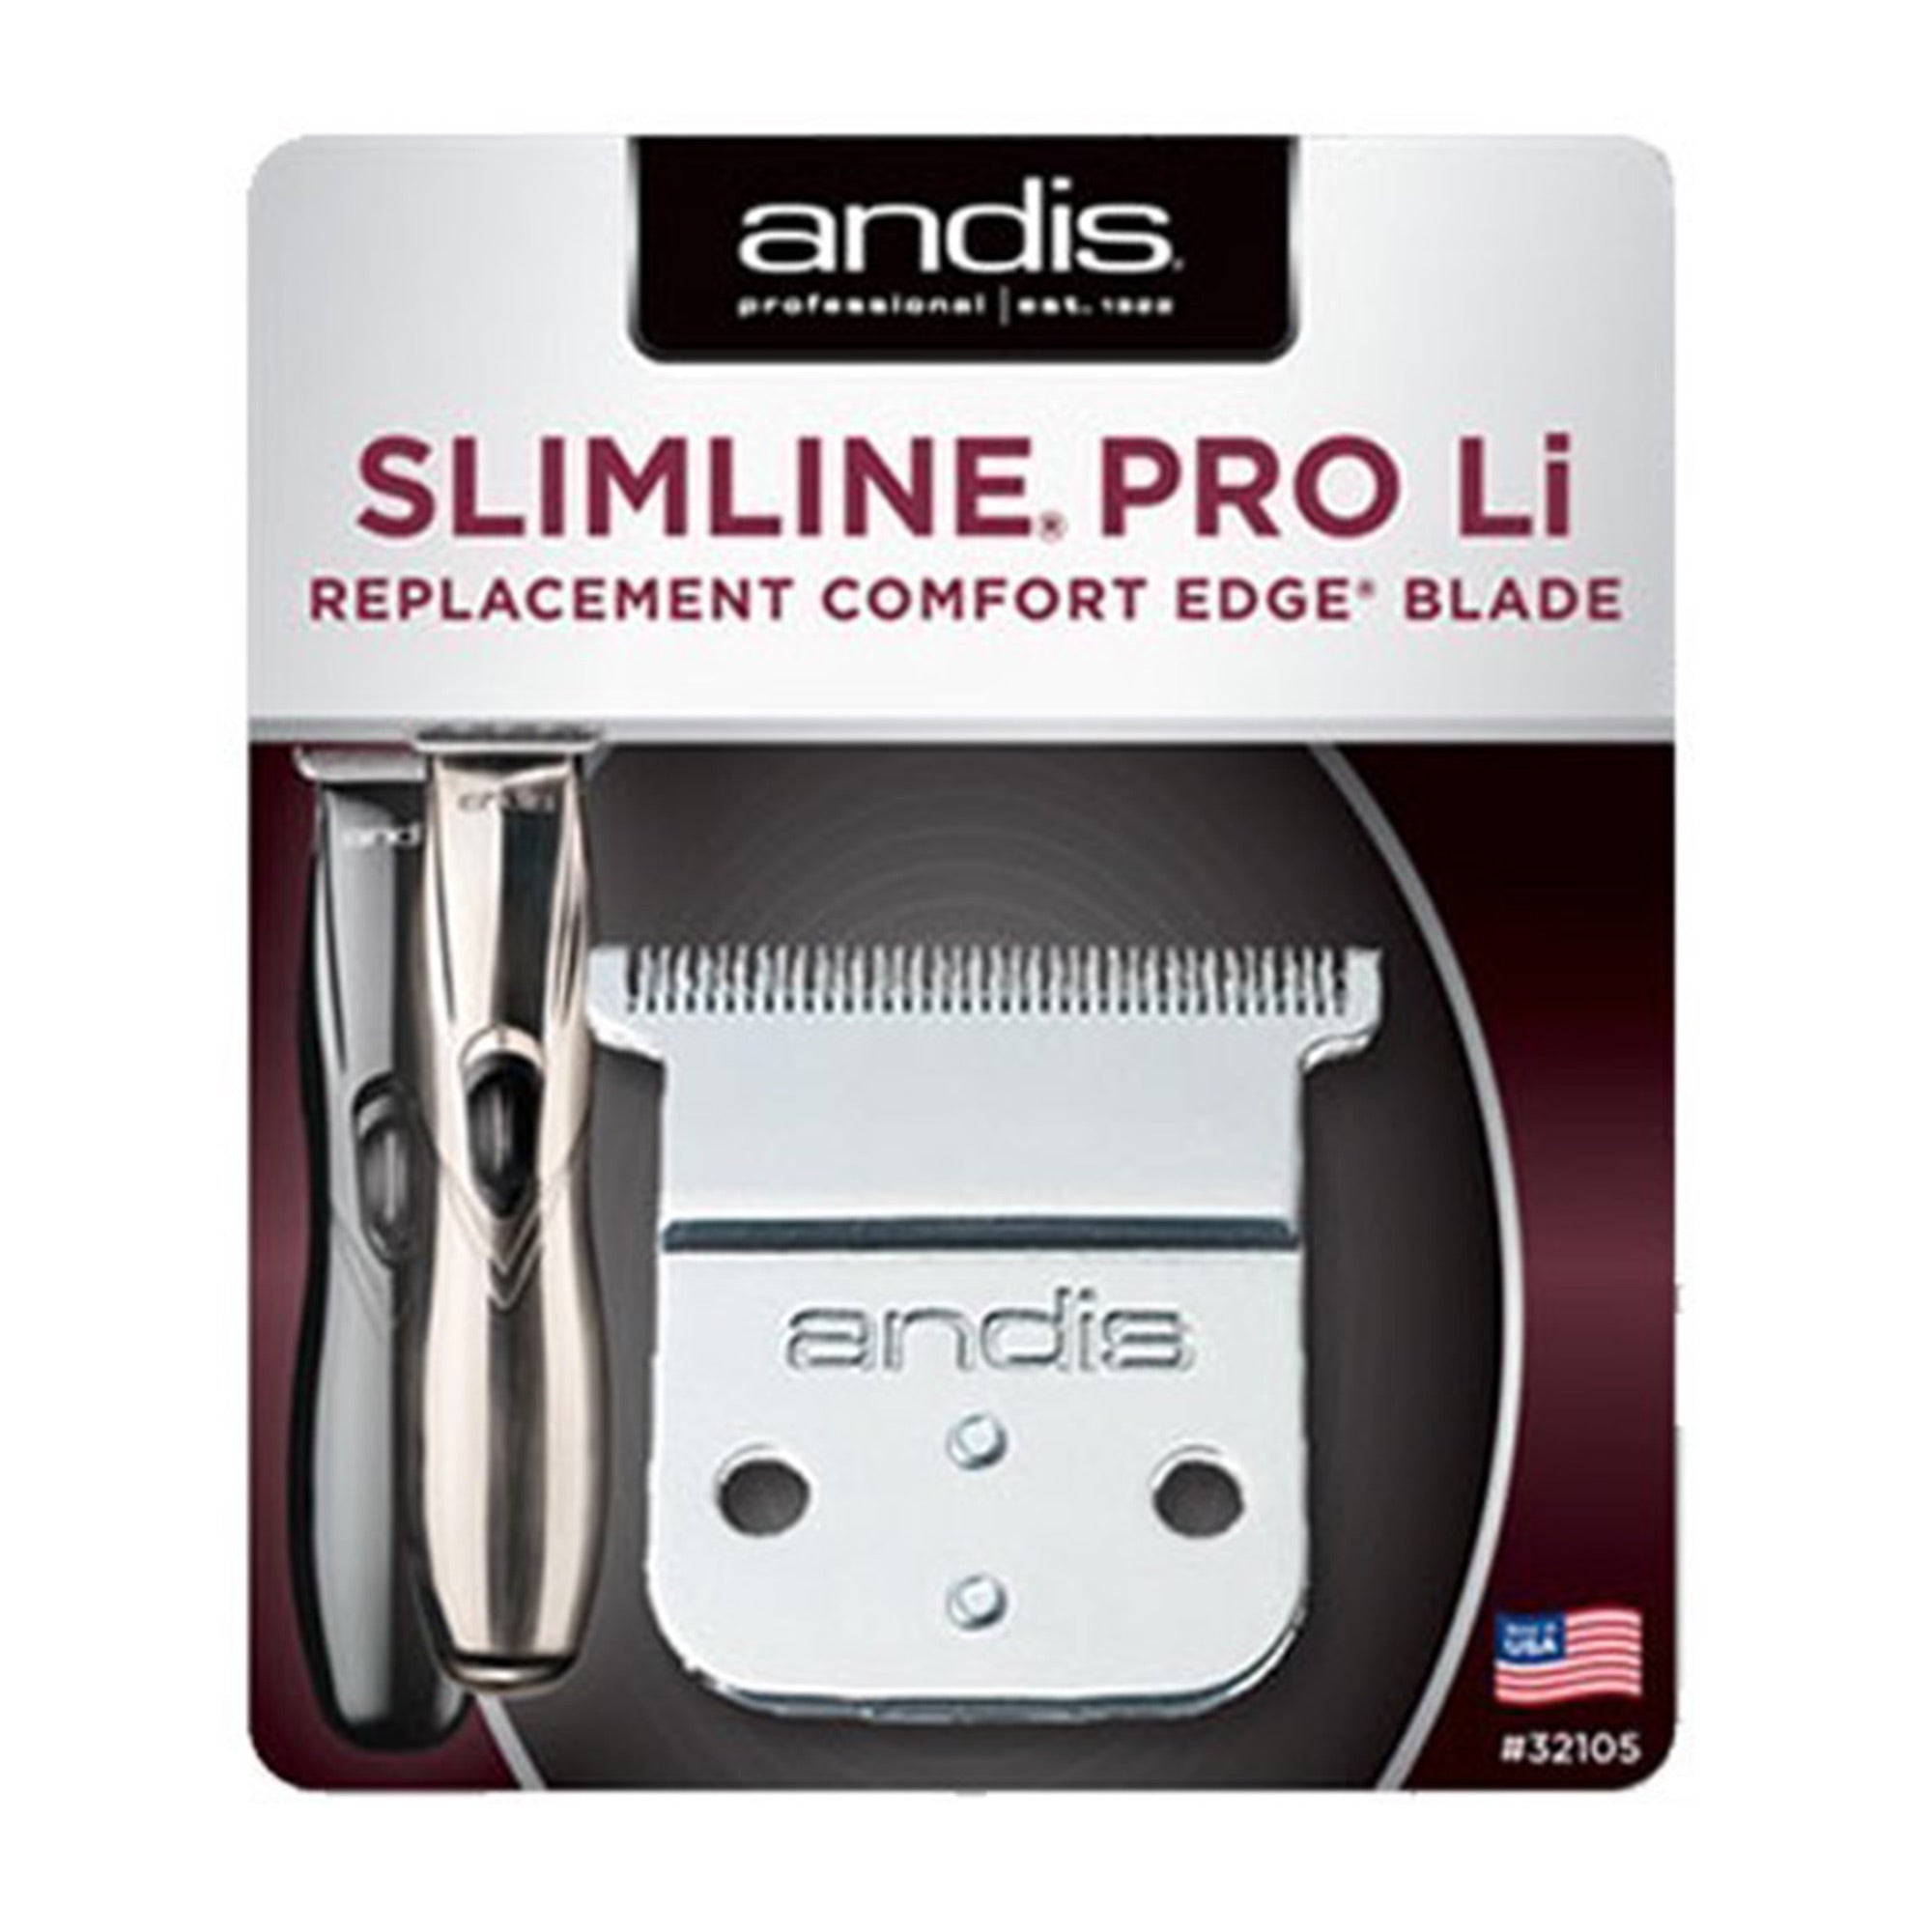 Andis - Slimline Pro Li Replacement Comfort Edge Blade #32105 - Eson Direct